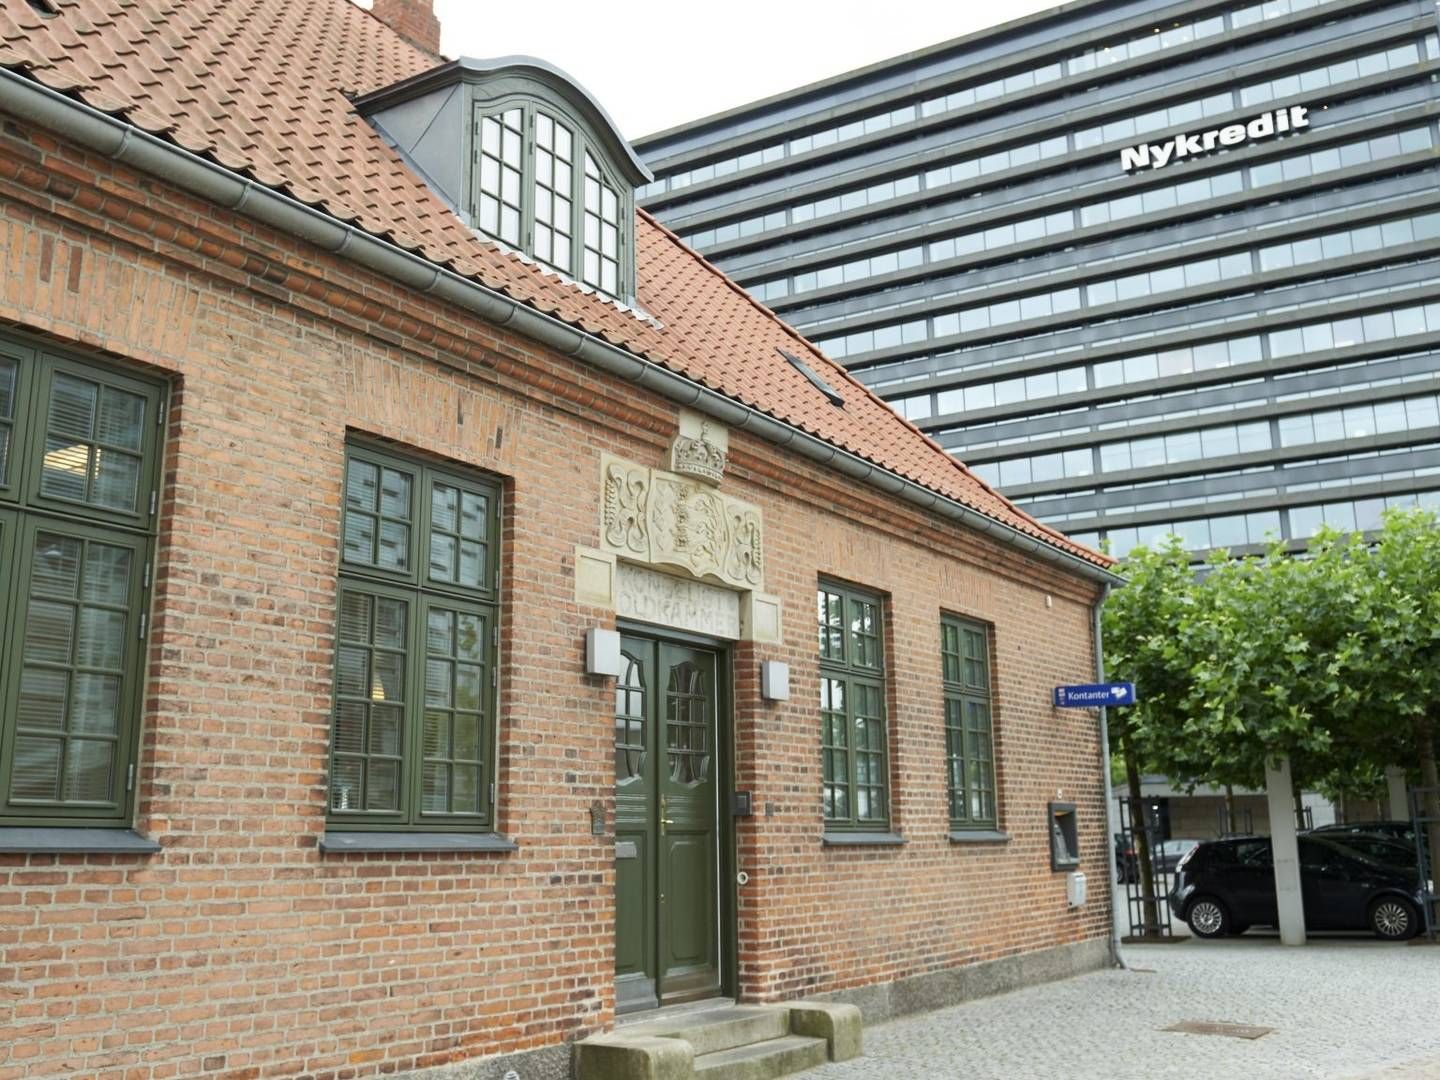 Forenet Kredit holder til på Kalvebod Brygge i København med Nykredit som nærmeste nabo. | Foto: PR/Forenet Kredit